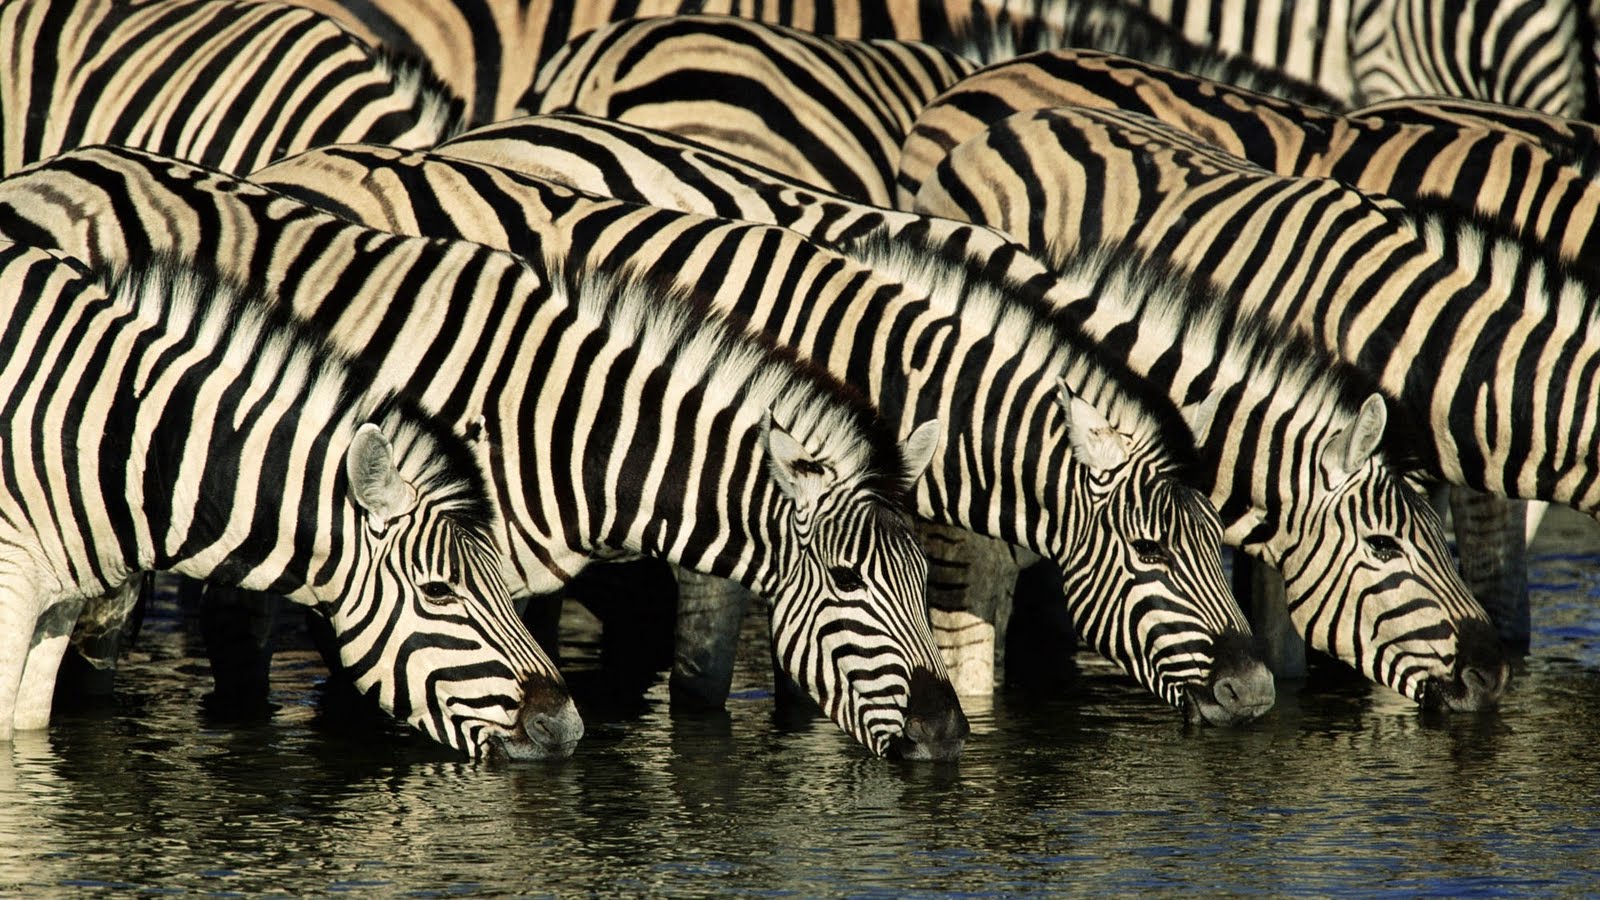 4K Zebra Wallpapers de alta calidad | Descargar gratis